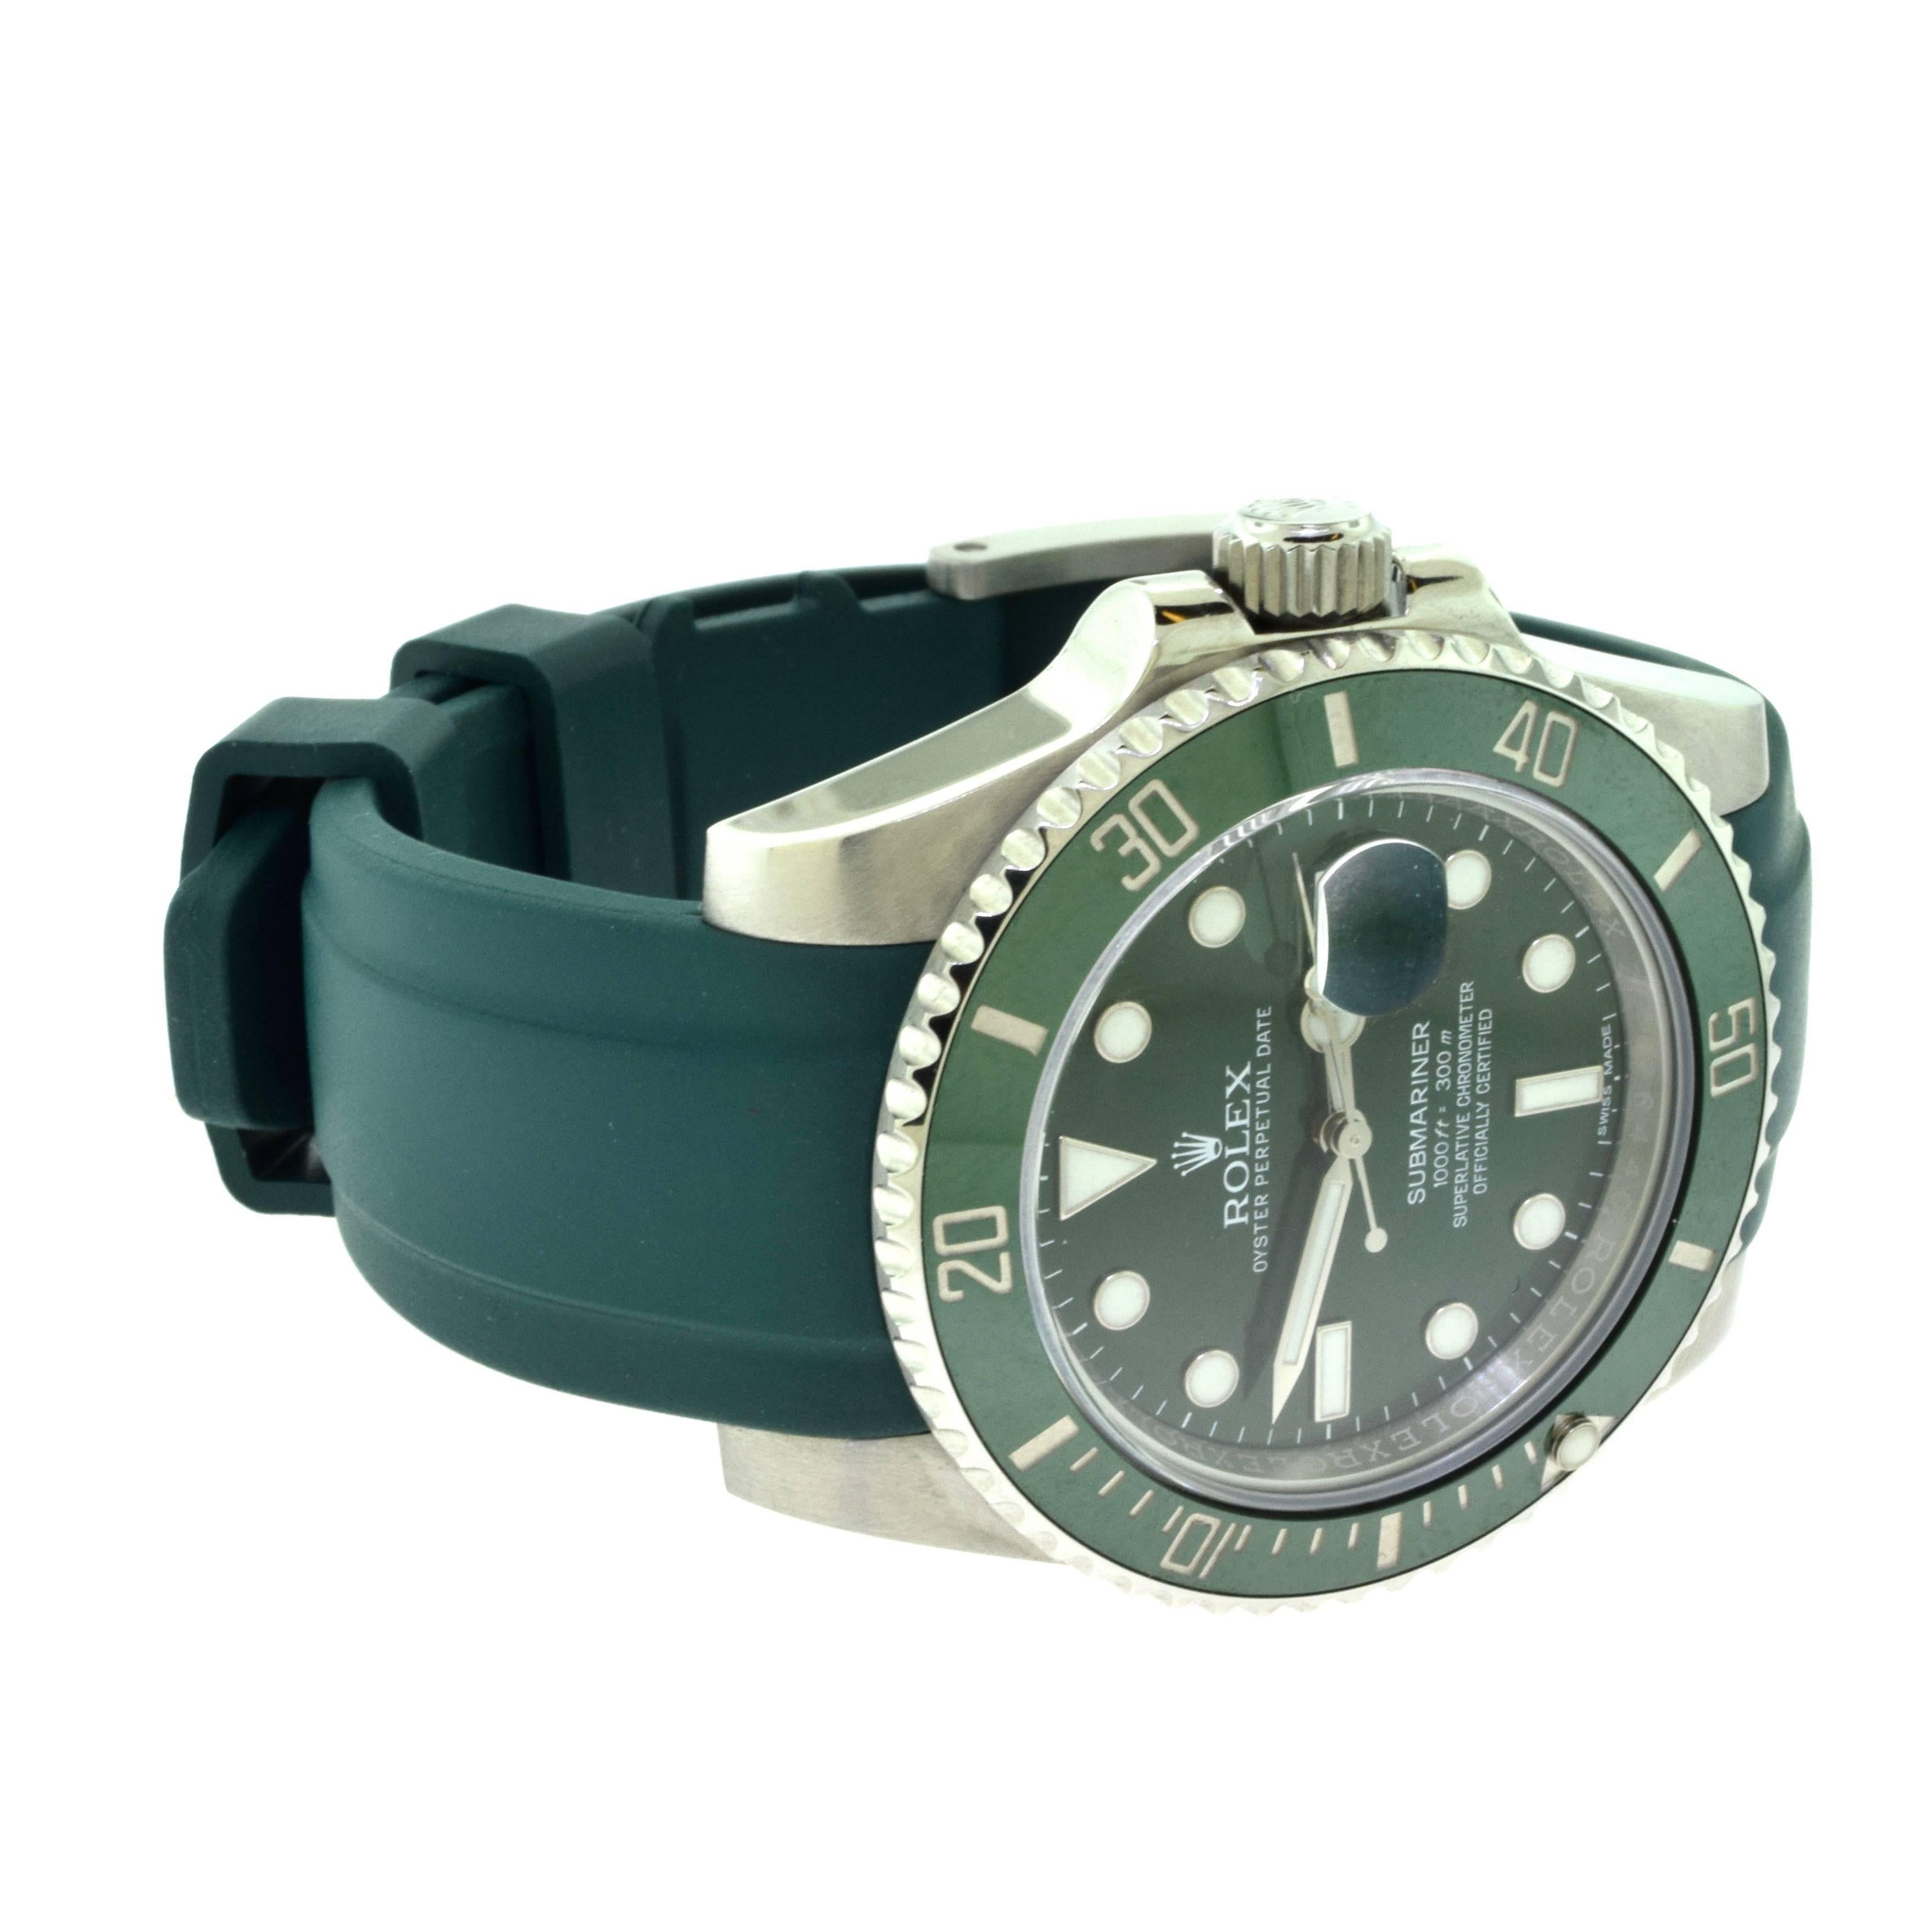 Rolex Stainless Steel Green Bezel Ceramic Date Submariner Greenhawk Wristwatch In Excellent Condition For Sale In Miami, FL